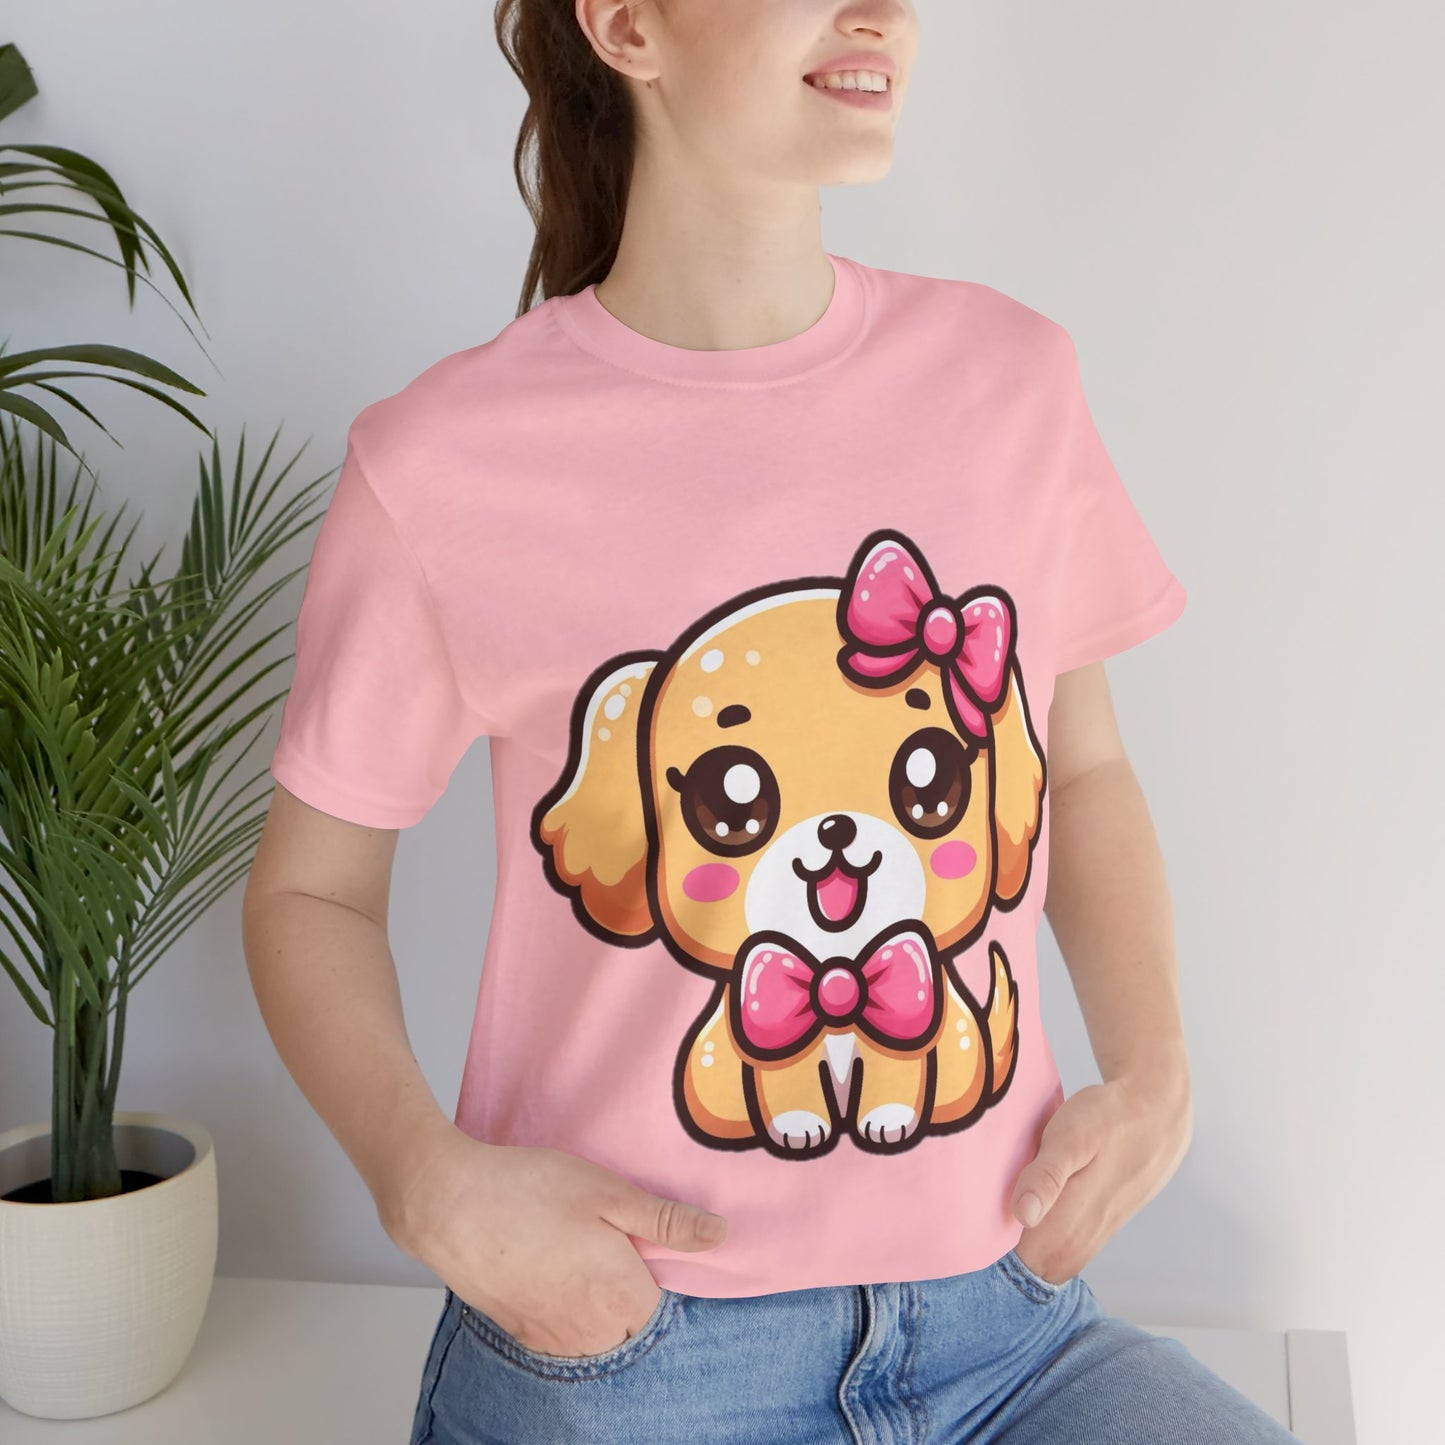 Adorable Kawaii Golden Labrador T-Shirt: Express Your Love for Cute Pups!